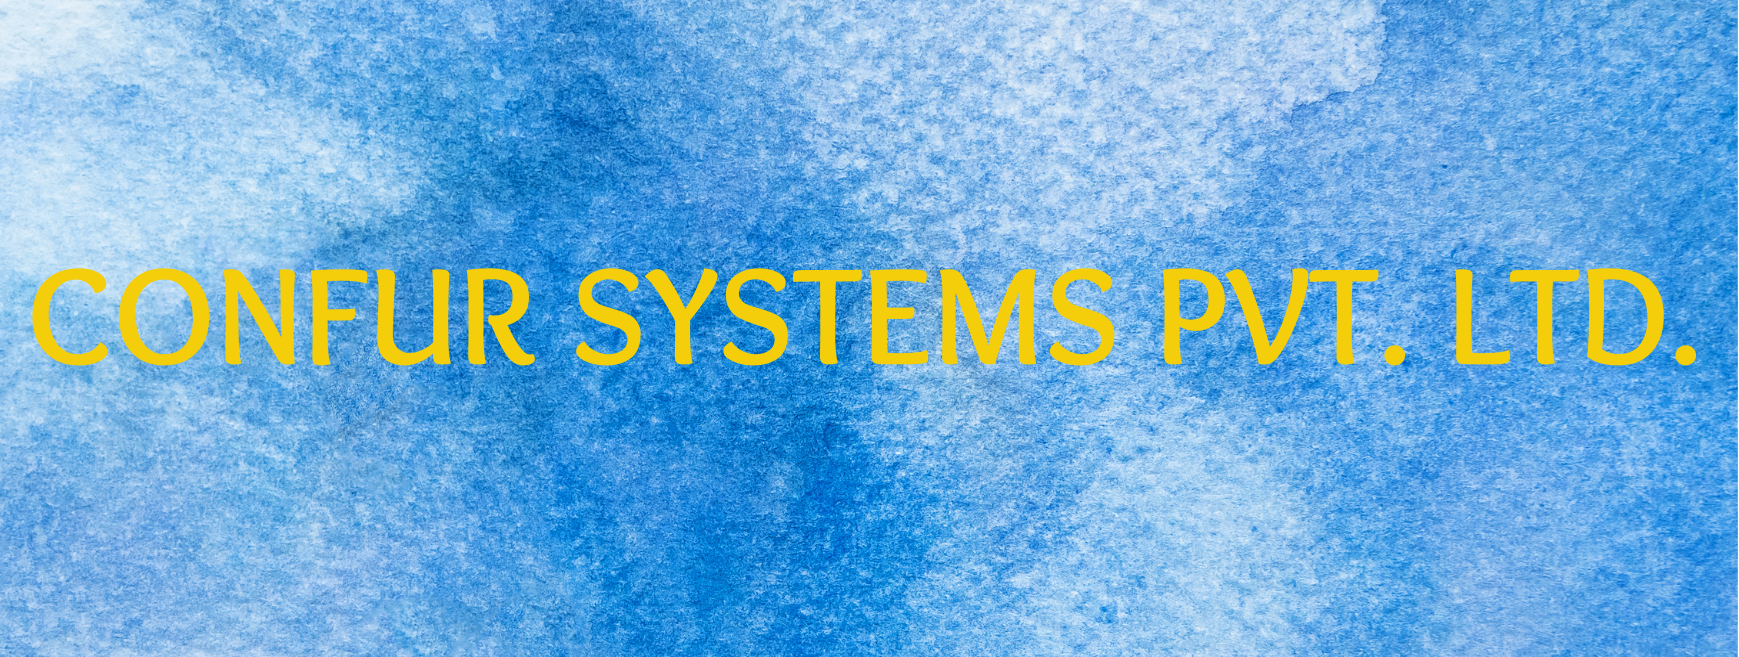 Confur Systems Pvt. Ltd..